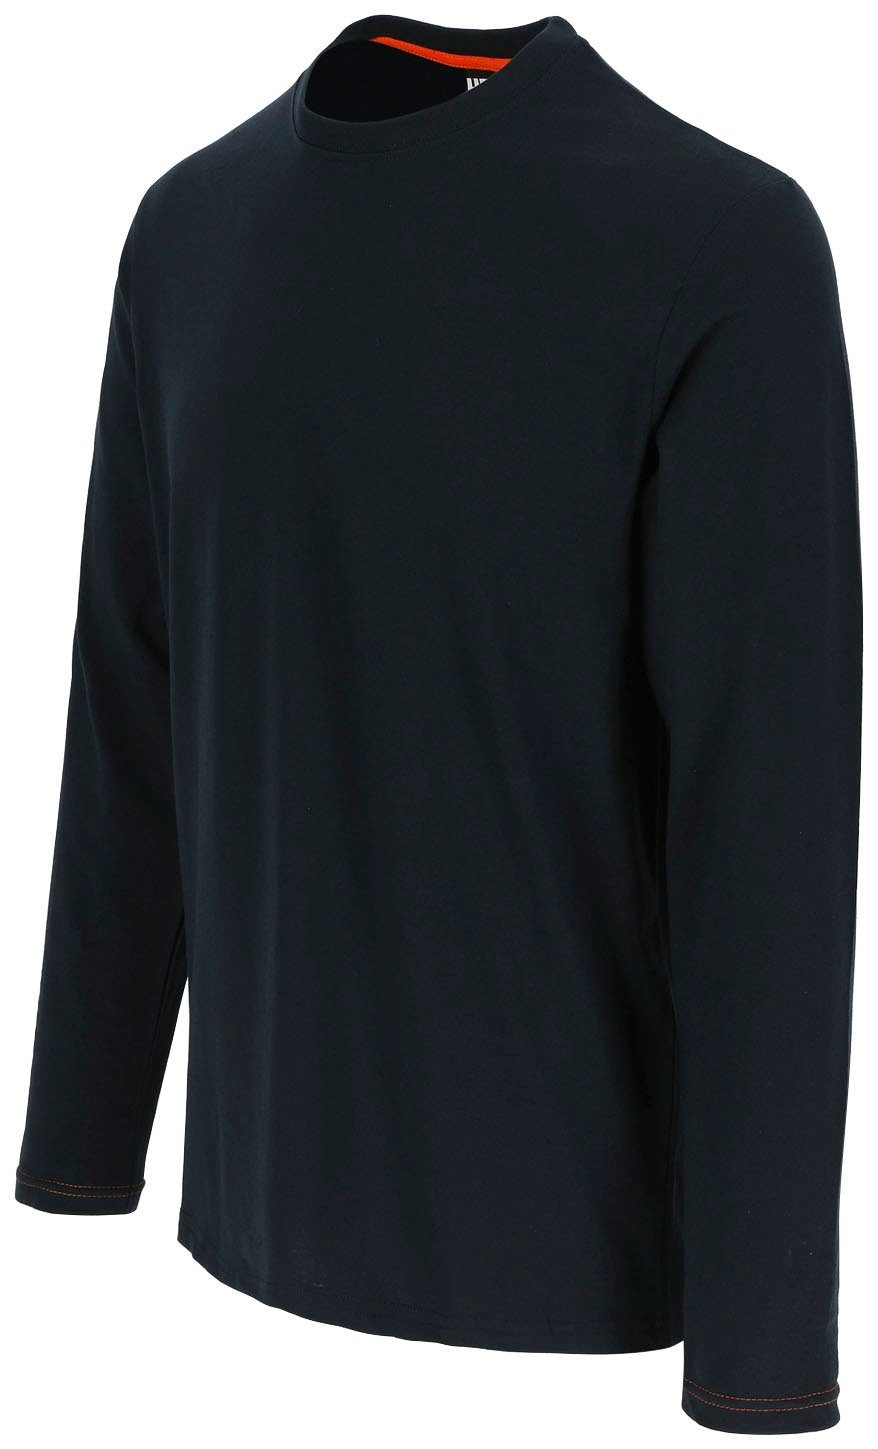 Herock Langarmshirt Noet t-shirt Tragegefühl, marine langärmlig vorgeschrumpfte Basic Baumwolle, % angenehmes 100